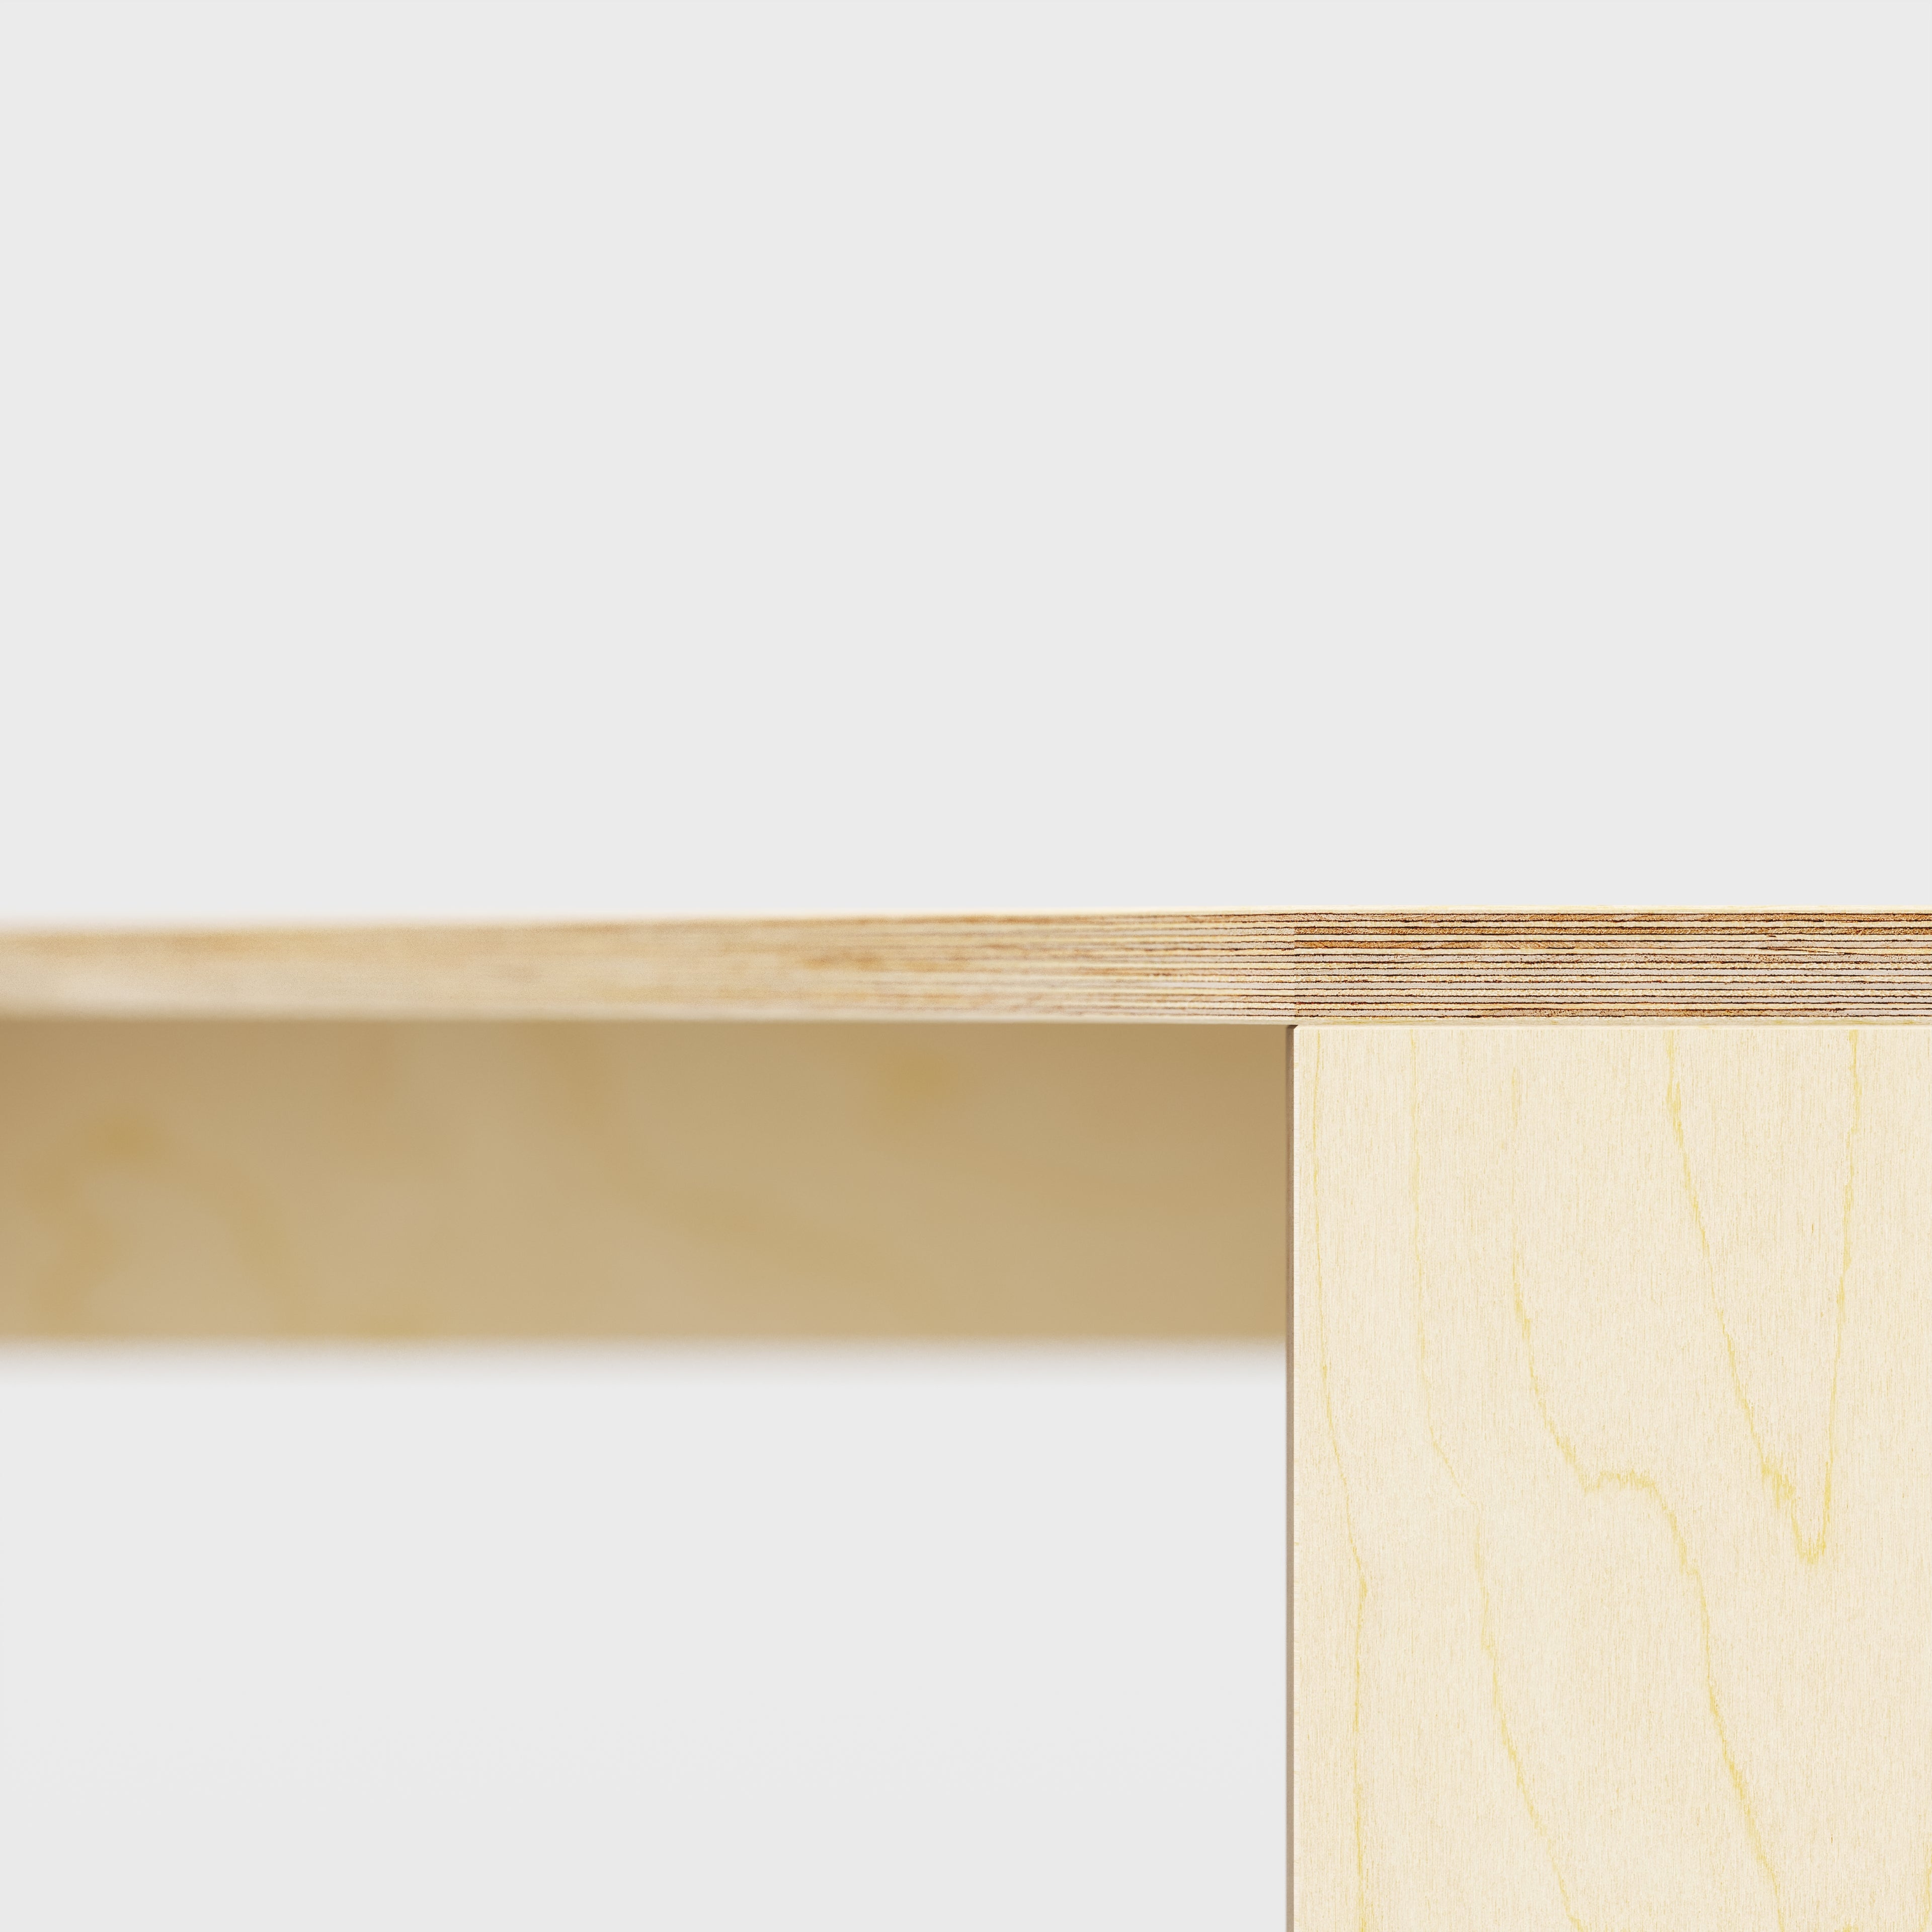 Custom Plywood Corner Desk with Solid Sides